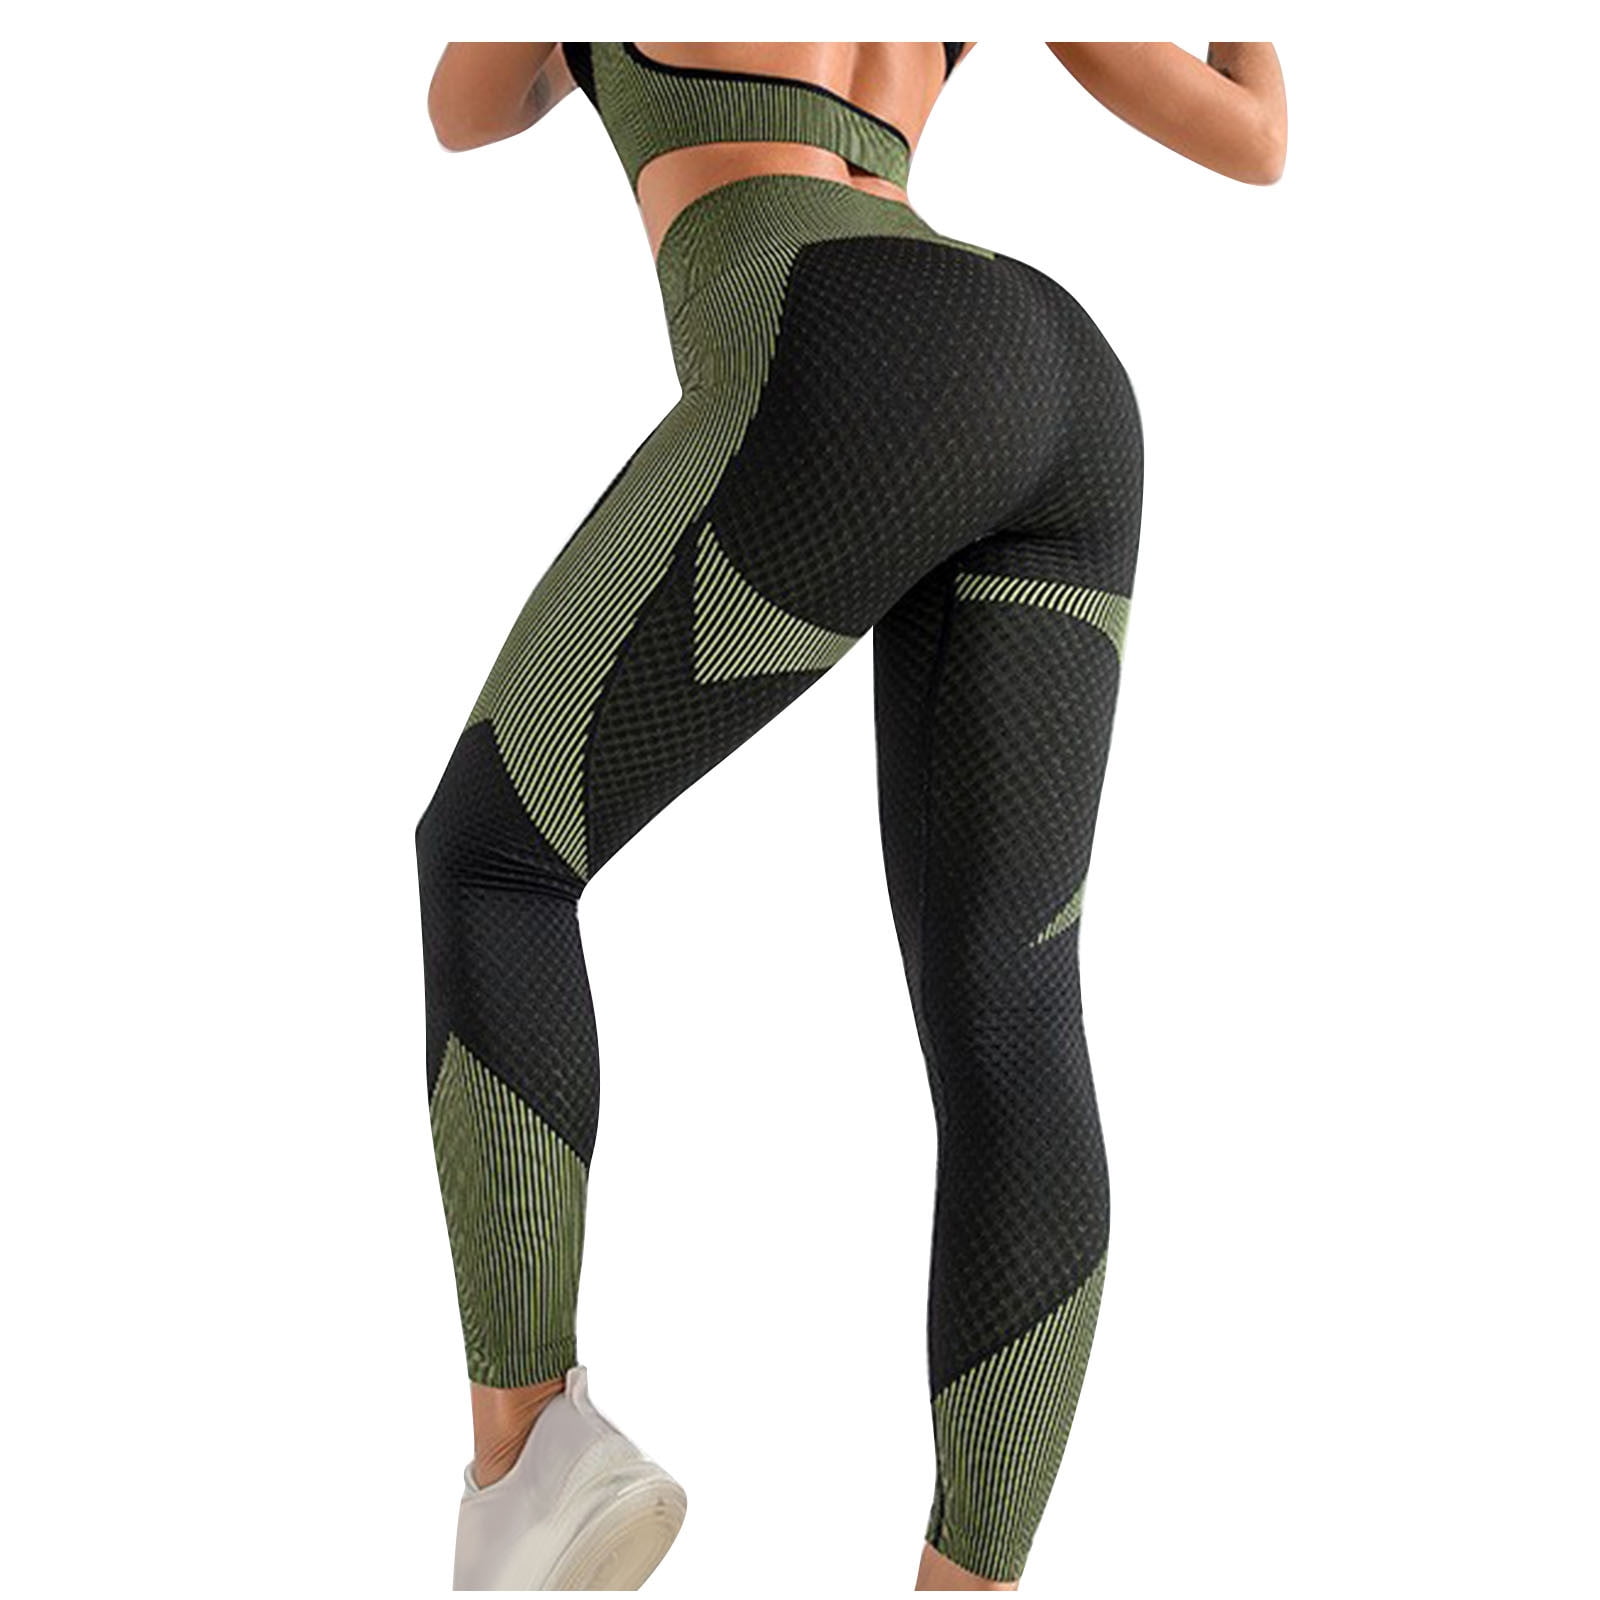 Buy Emprella Biker Shorts for Women, 2 Pack Bike Short, Spandex -Slip-  Shorts for Yoga Gym Nude 2 Pack at